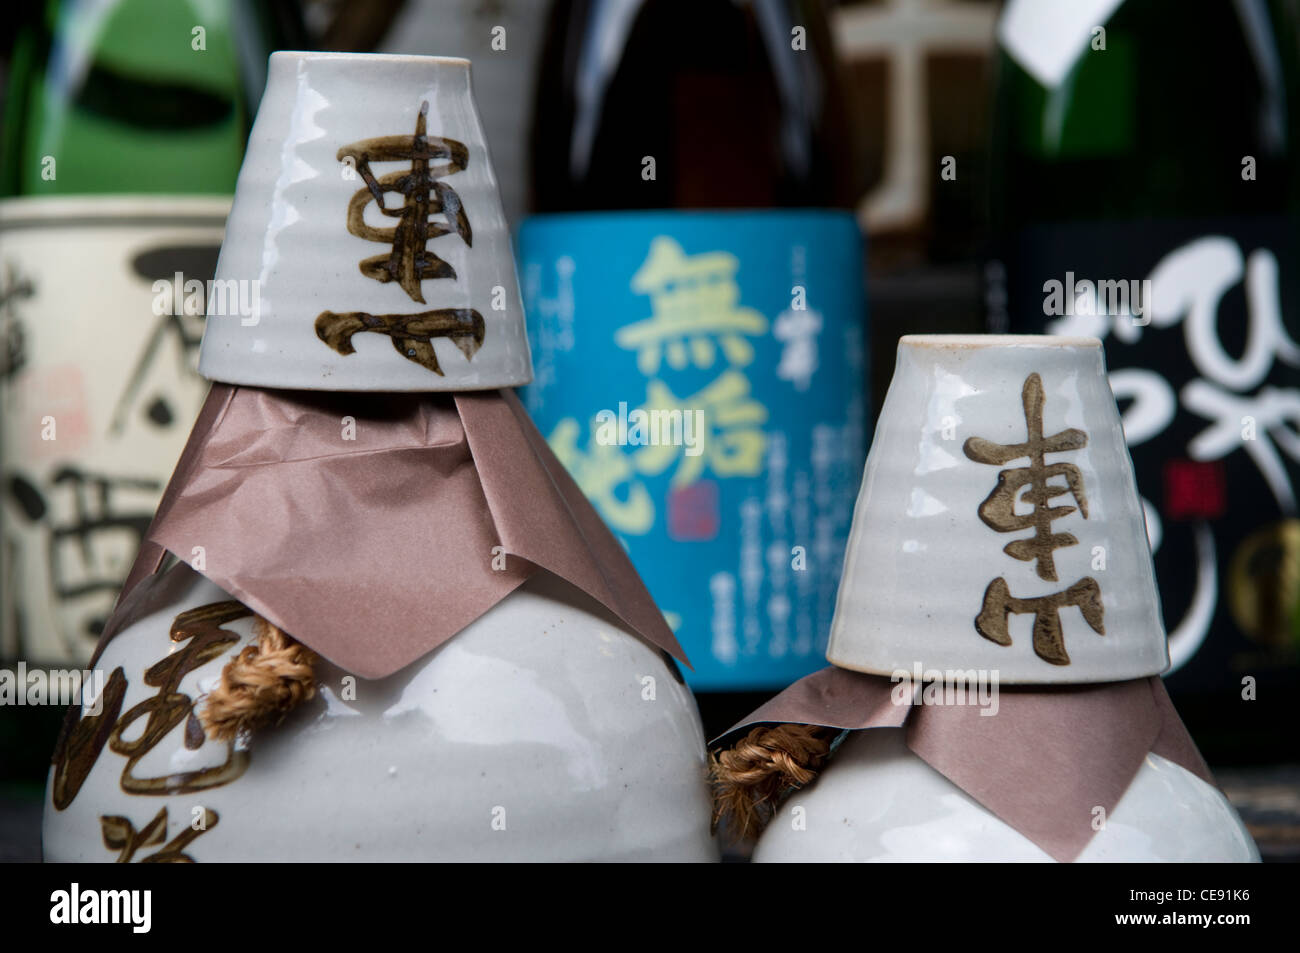 Sake bottle and cup Takayama Japan Stock Photo